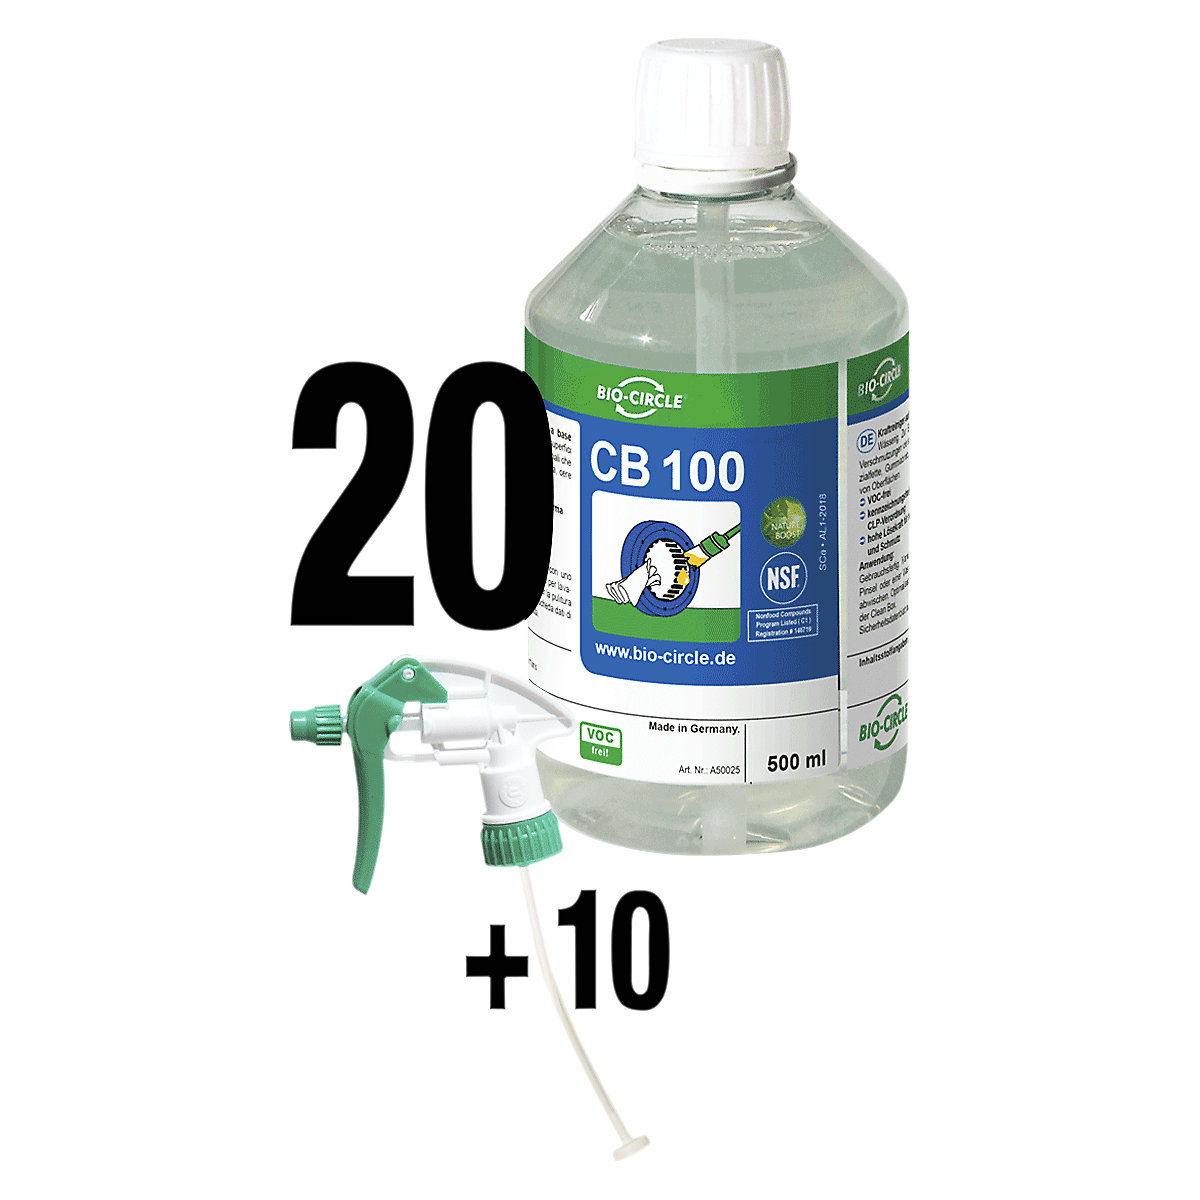 CB 100 industrial cleaner - Bio-Circle